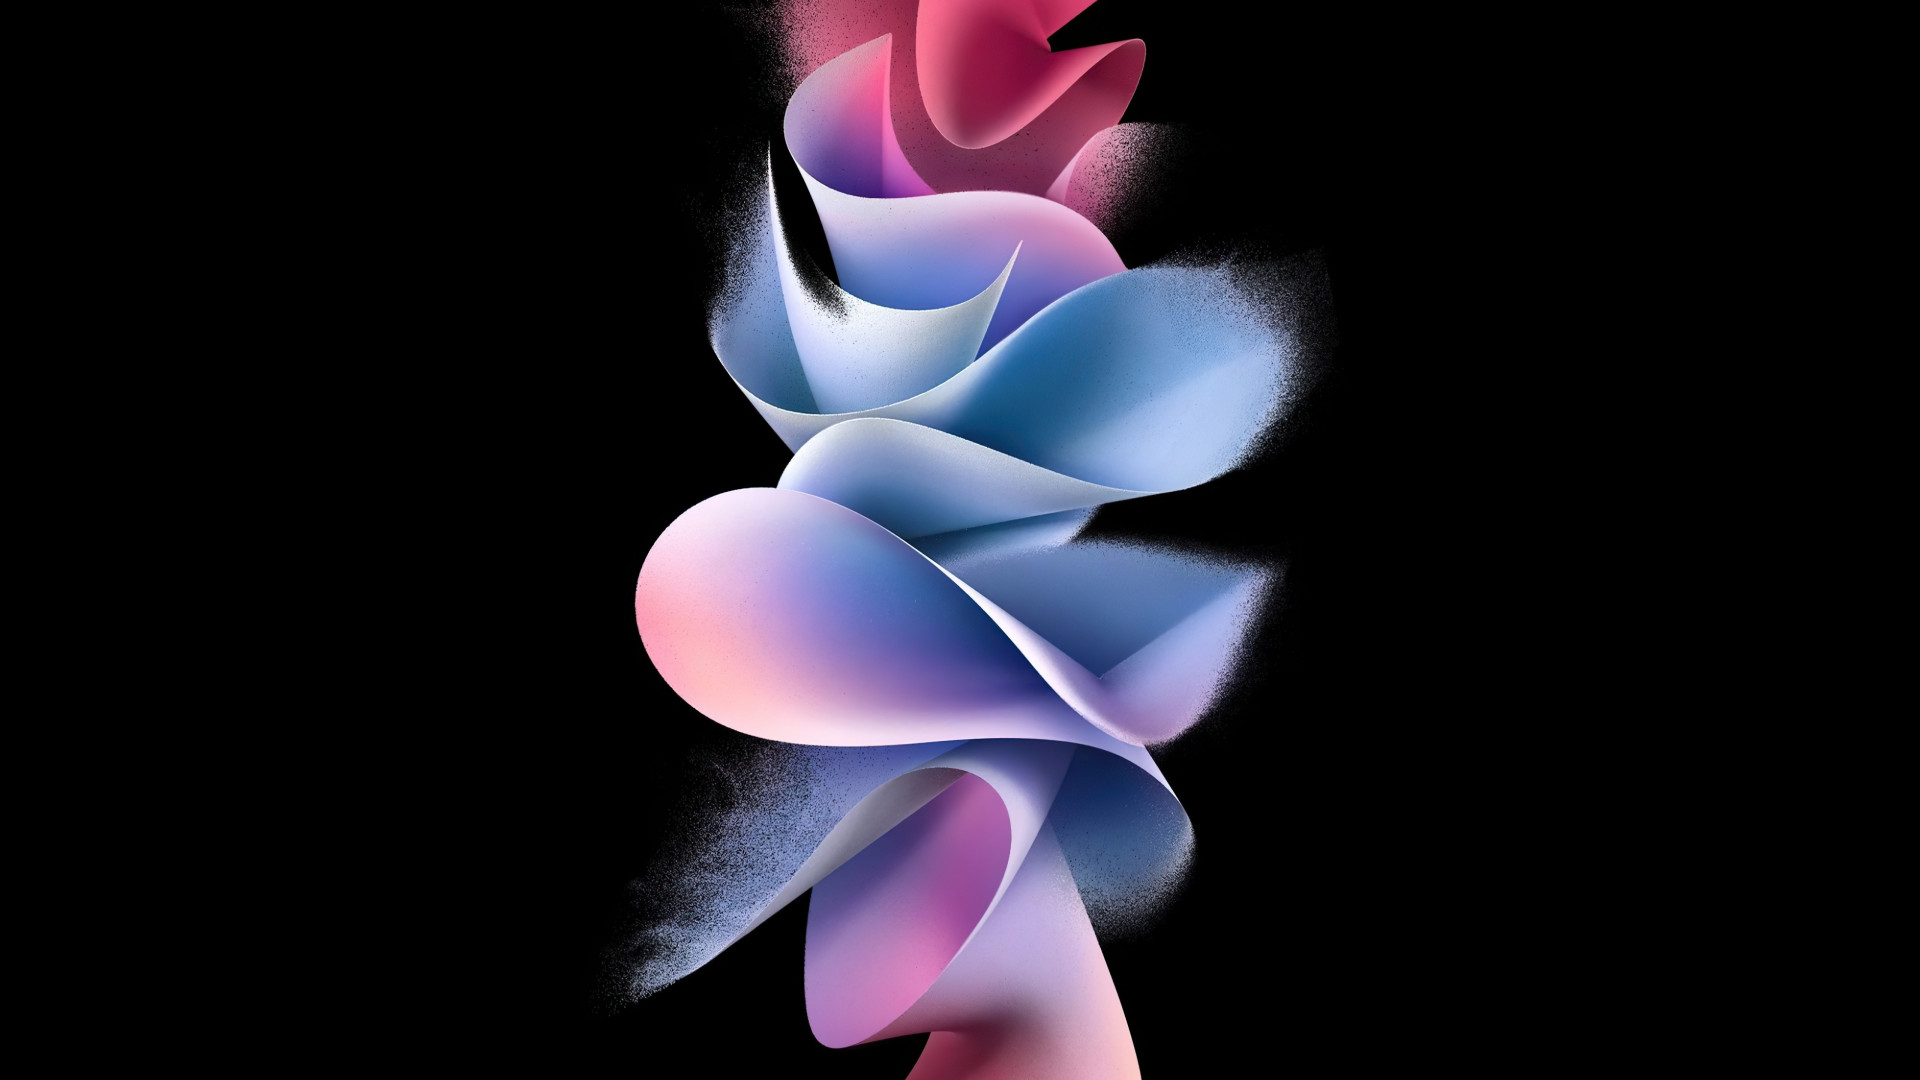 Insane abstract beauty on Samsung Galaxy Z Flip 3 wallpaper 1920x1080